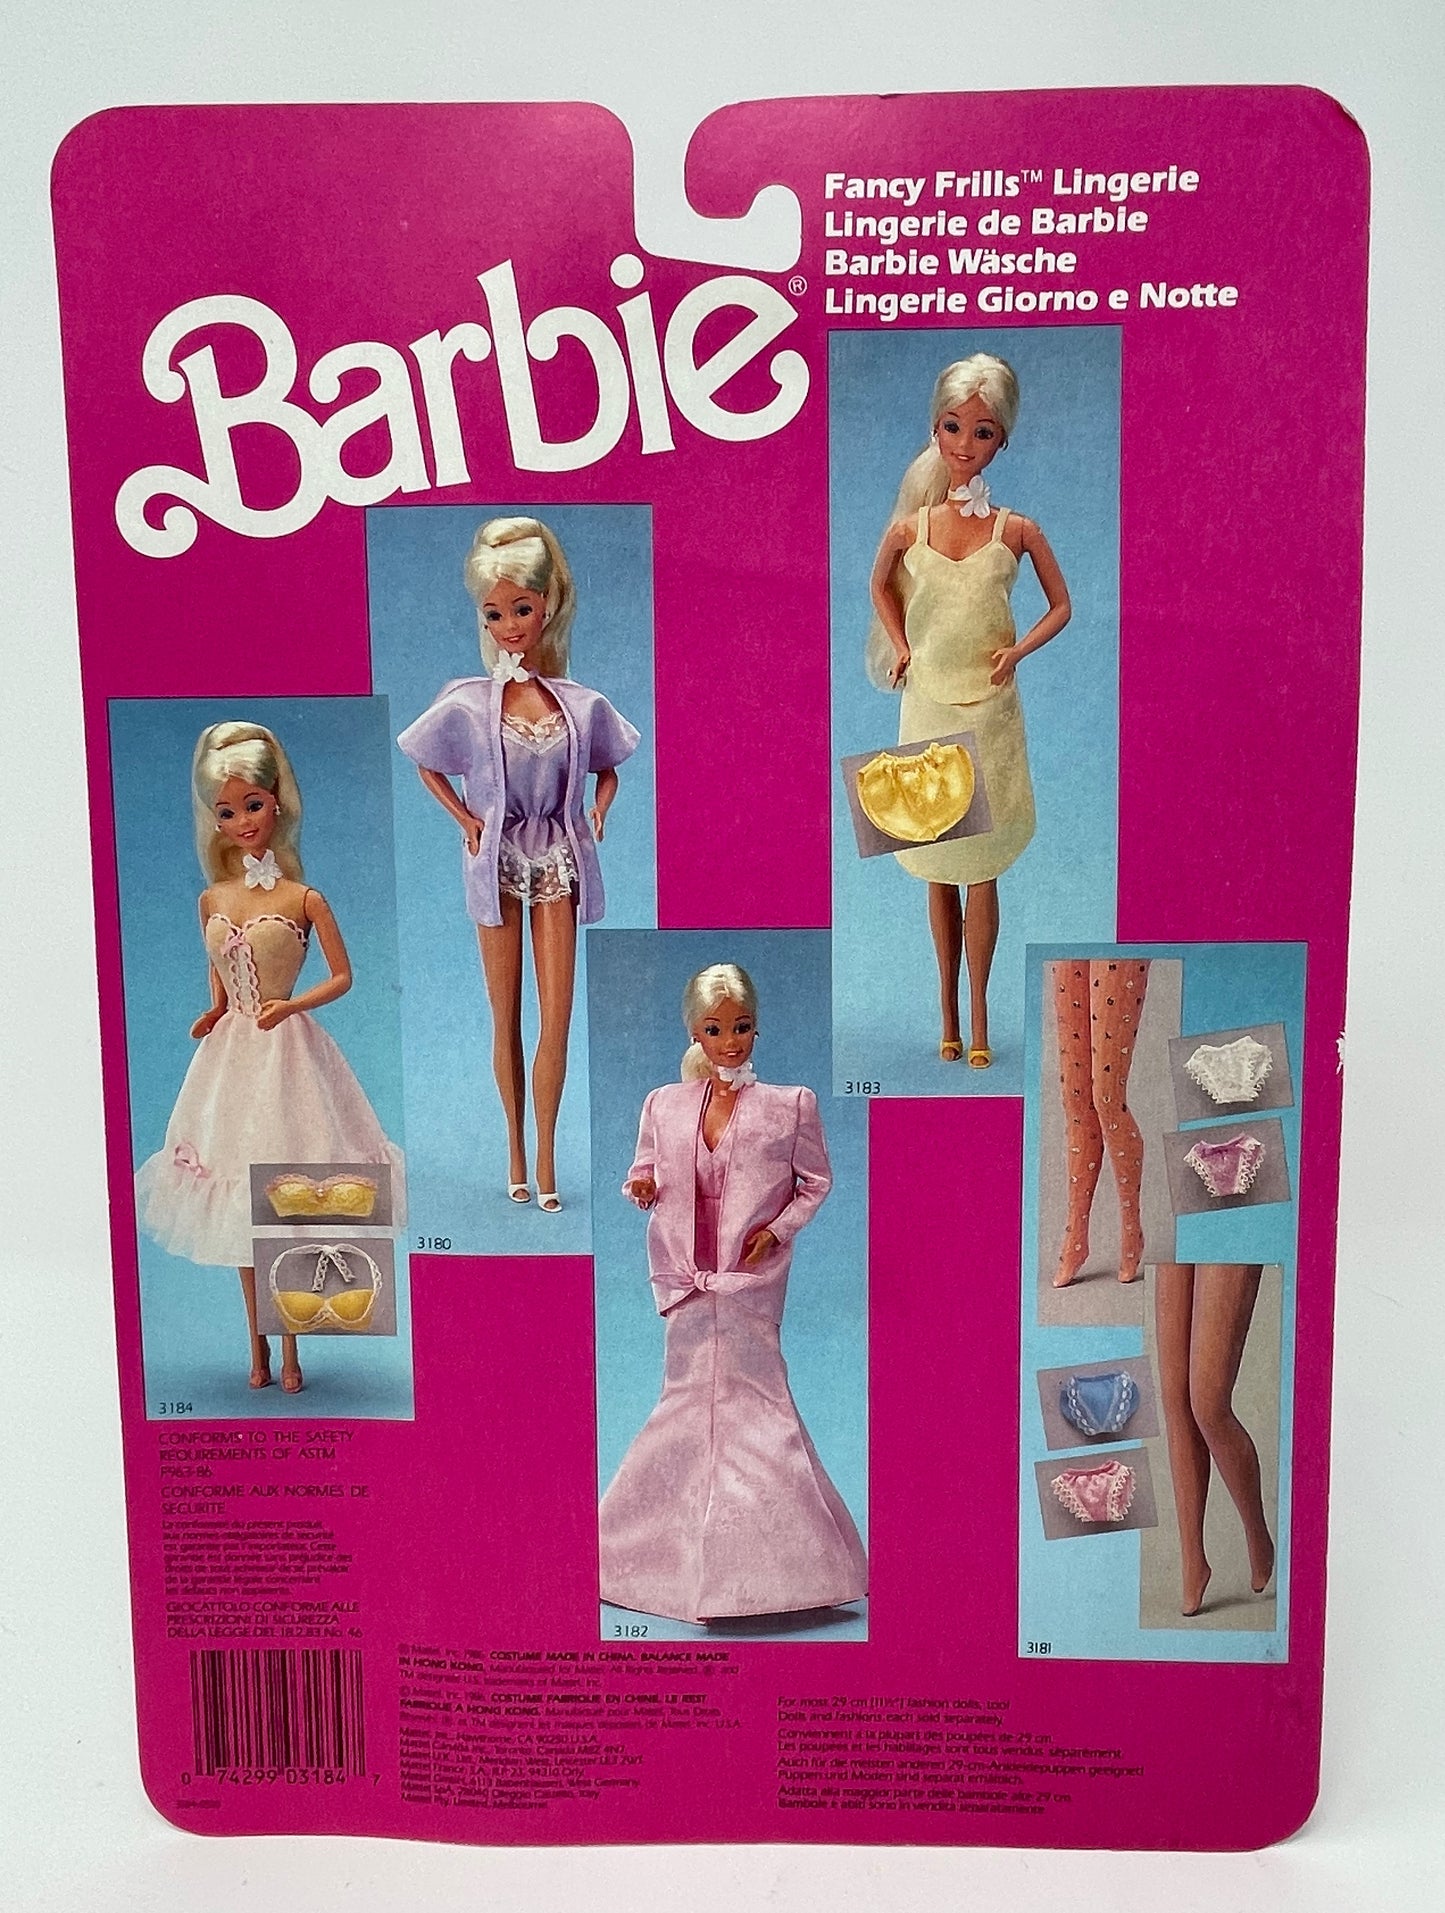 BARBIE - FANCY FRILLS LINGERIE - PINK/YELLOW DRESS/BRA TOPS/SANDALS #3184 - MATTEL 1986 (1 OF 2)